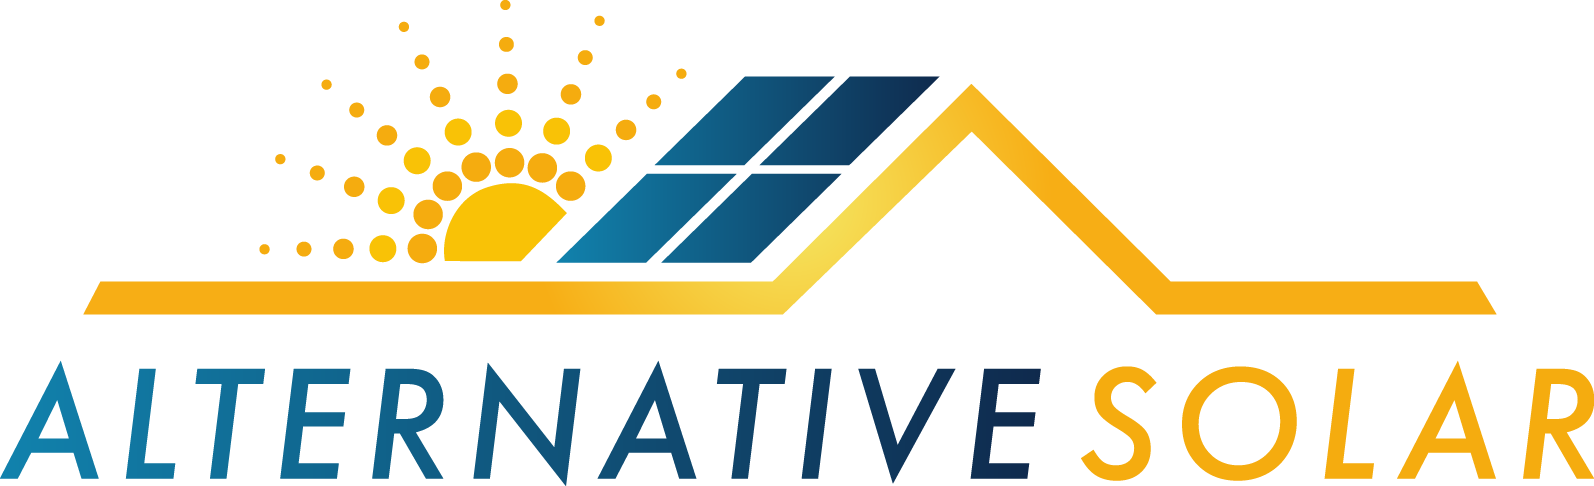 Alternative Solar logo